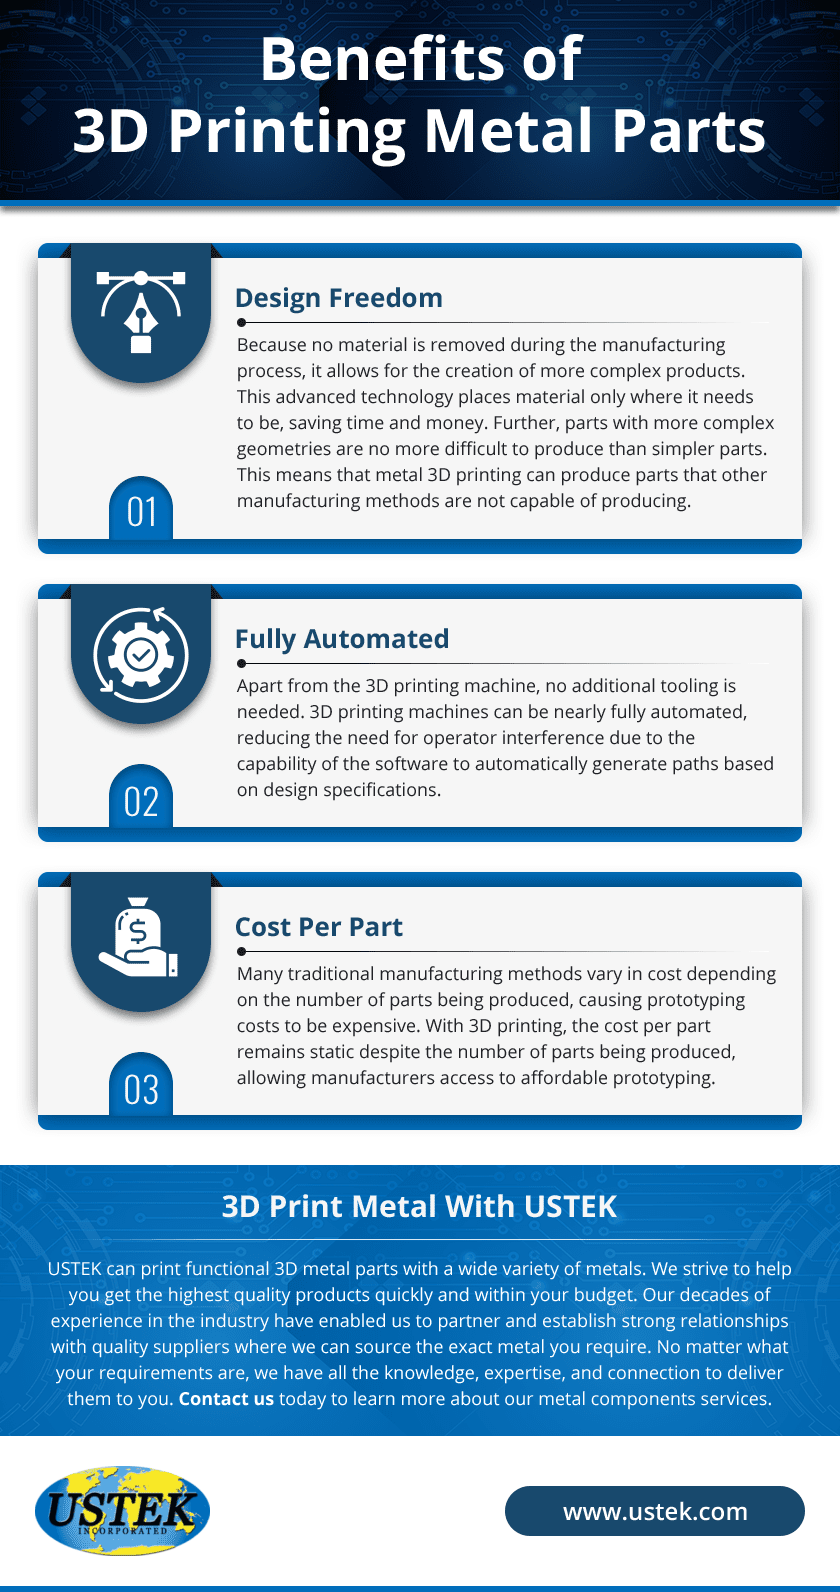 Benefits of 3D Printing Metal Parts